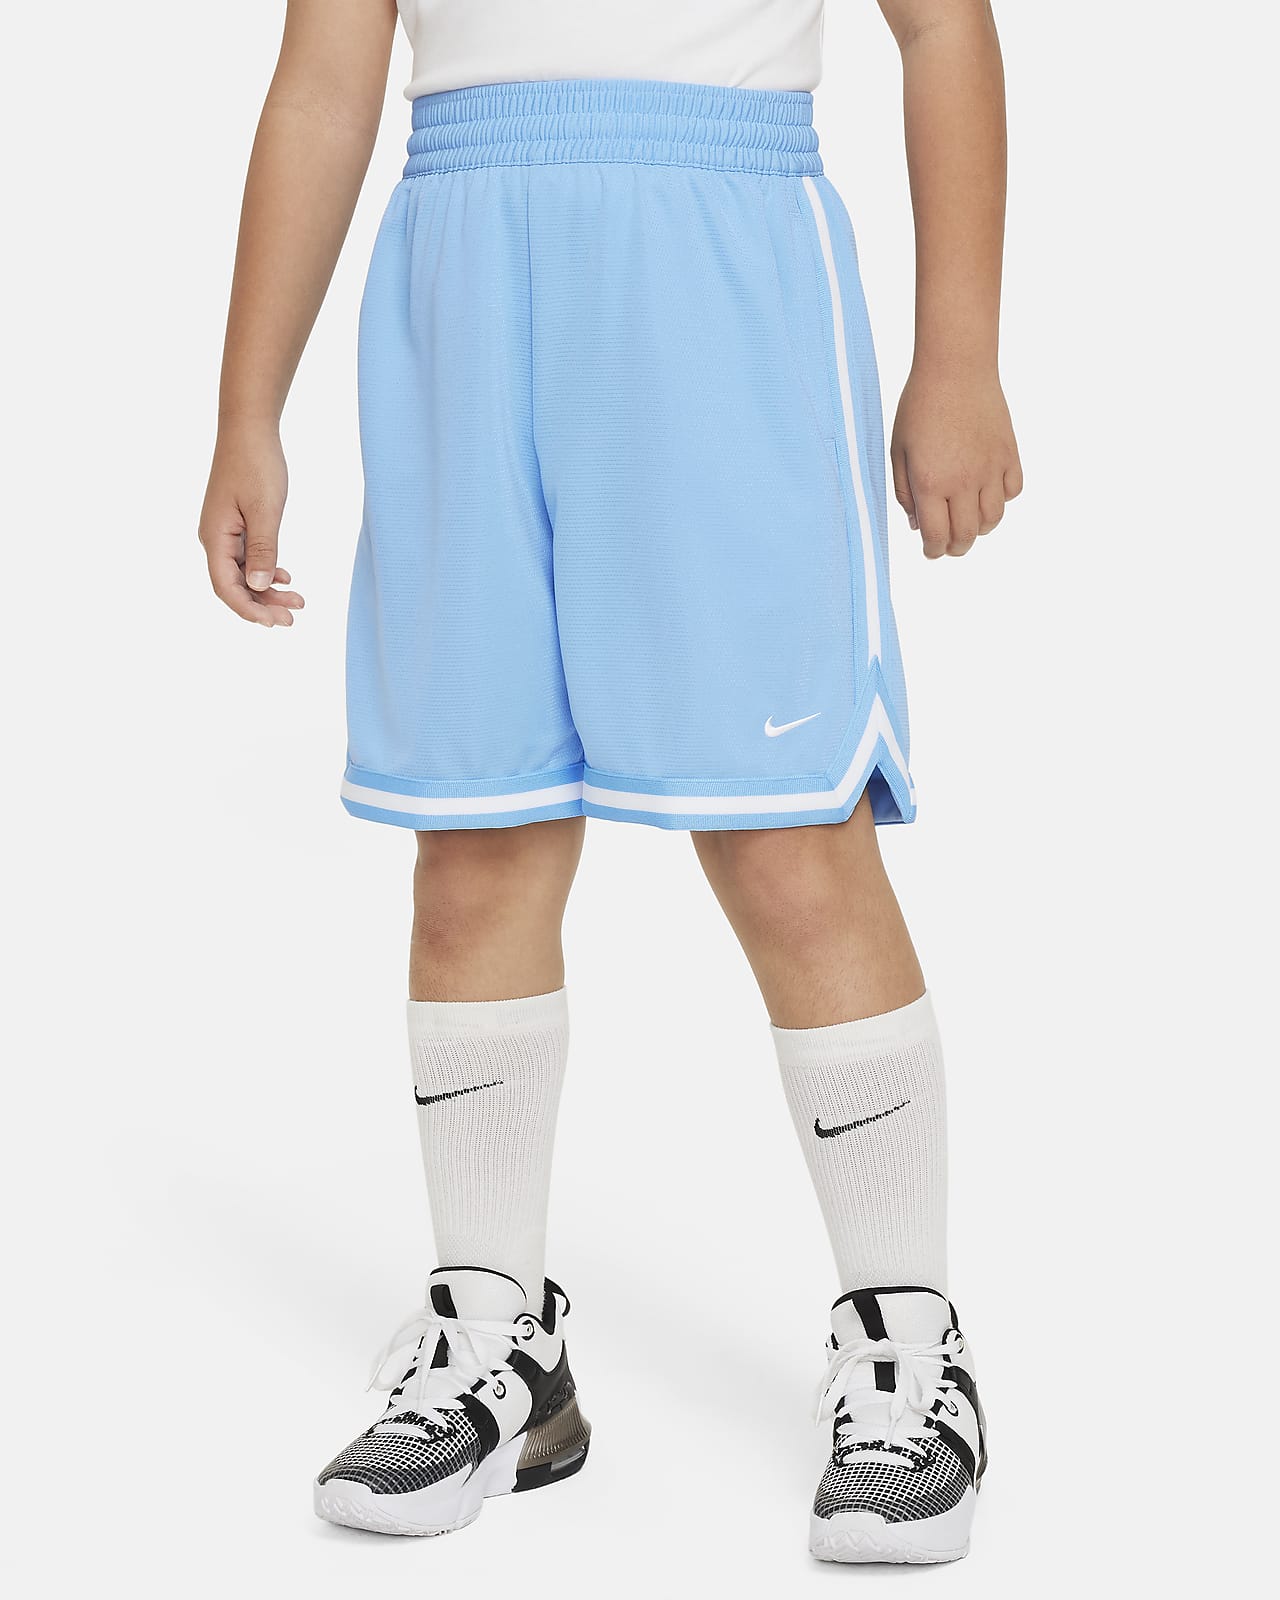 Shorts de básquetbol para niños talla grande Nike Dri-FIT DNA